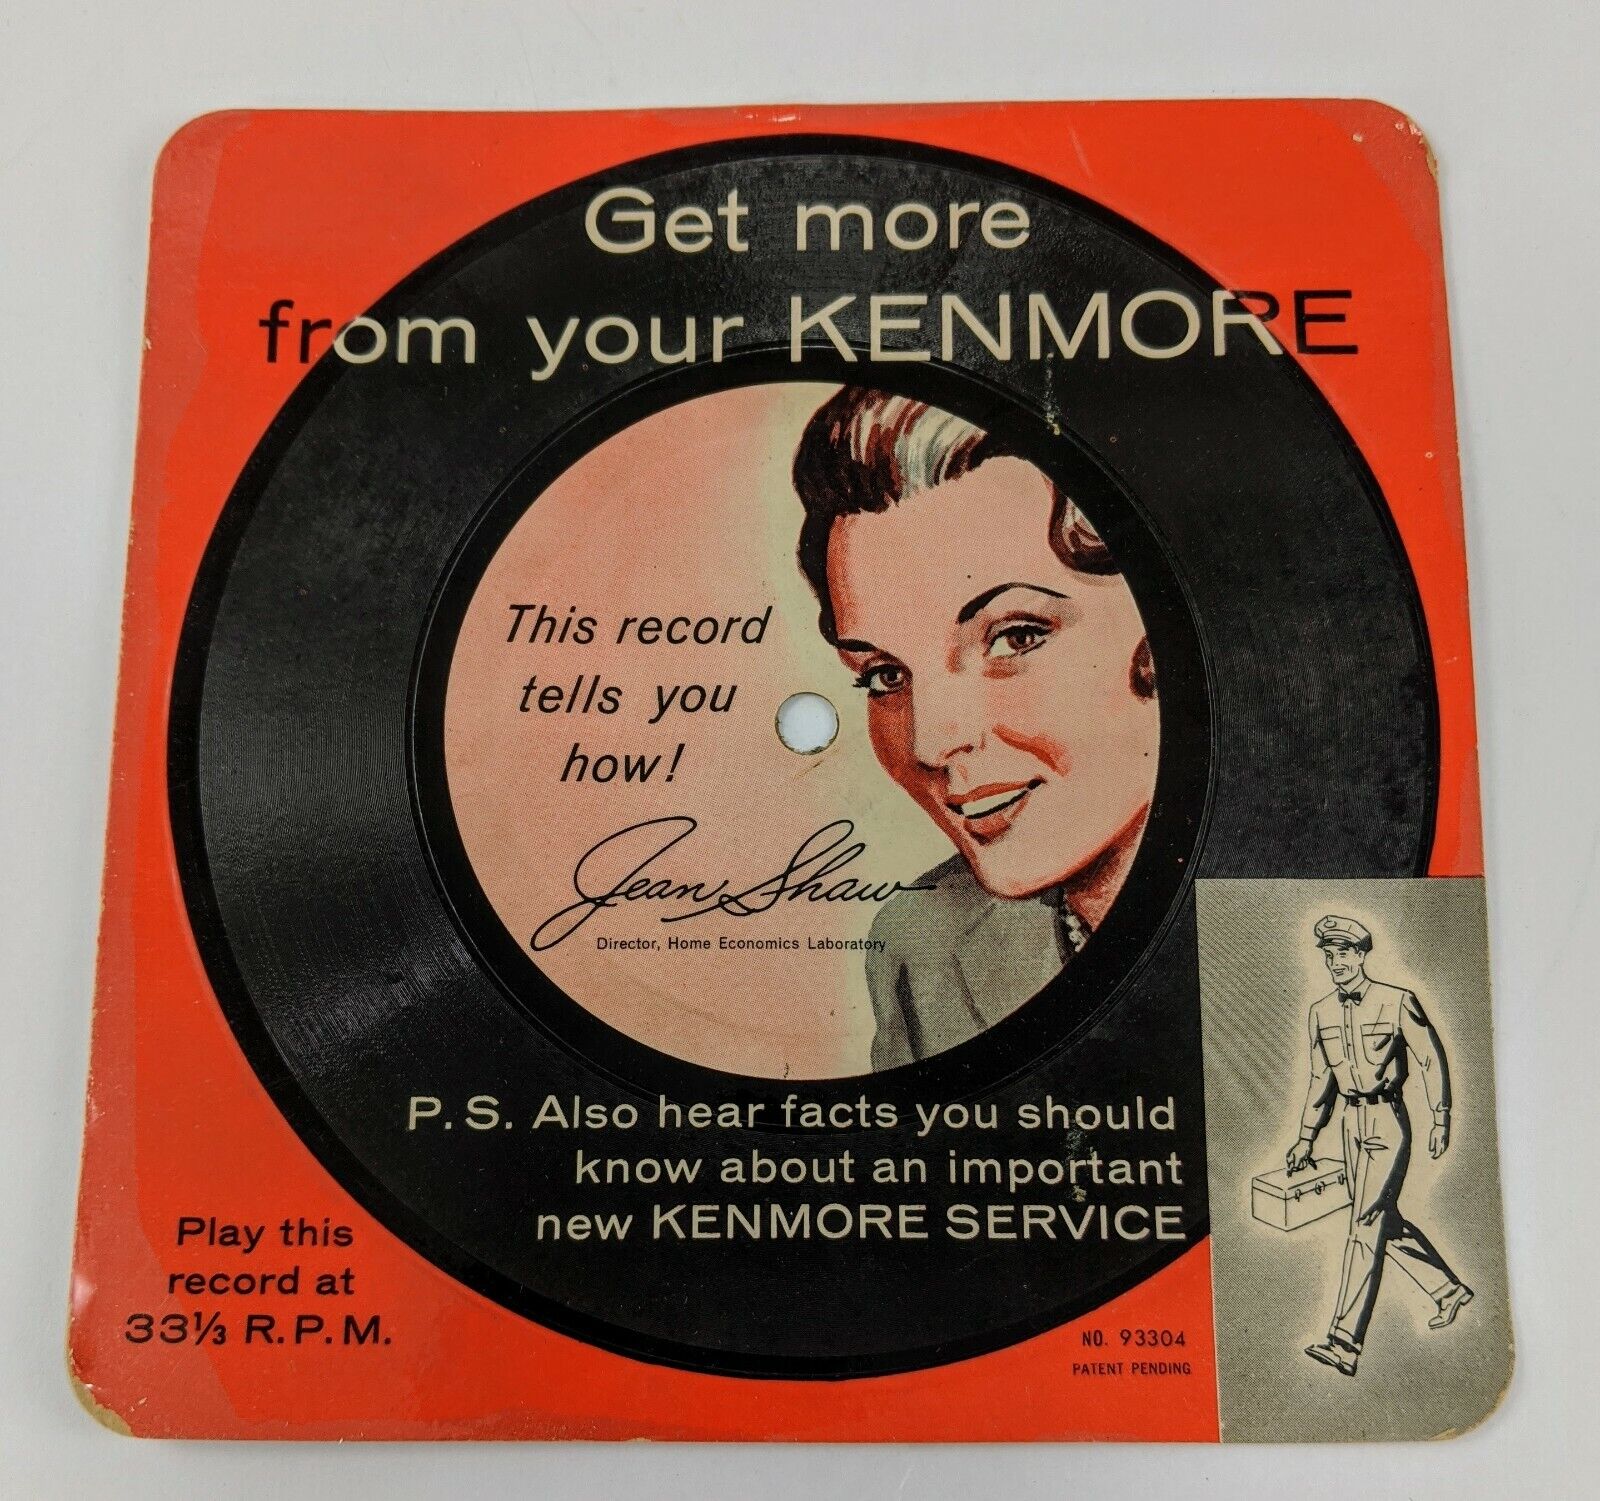 Vintage KENMORE Appliance Promo Advertising Working 33 Vinyl Record Jean Shaw 